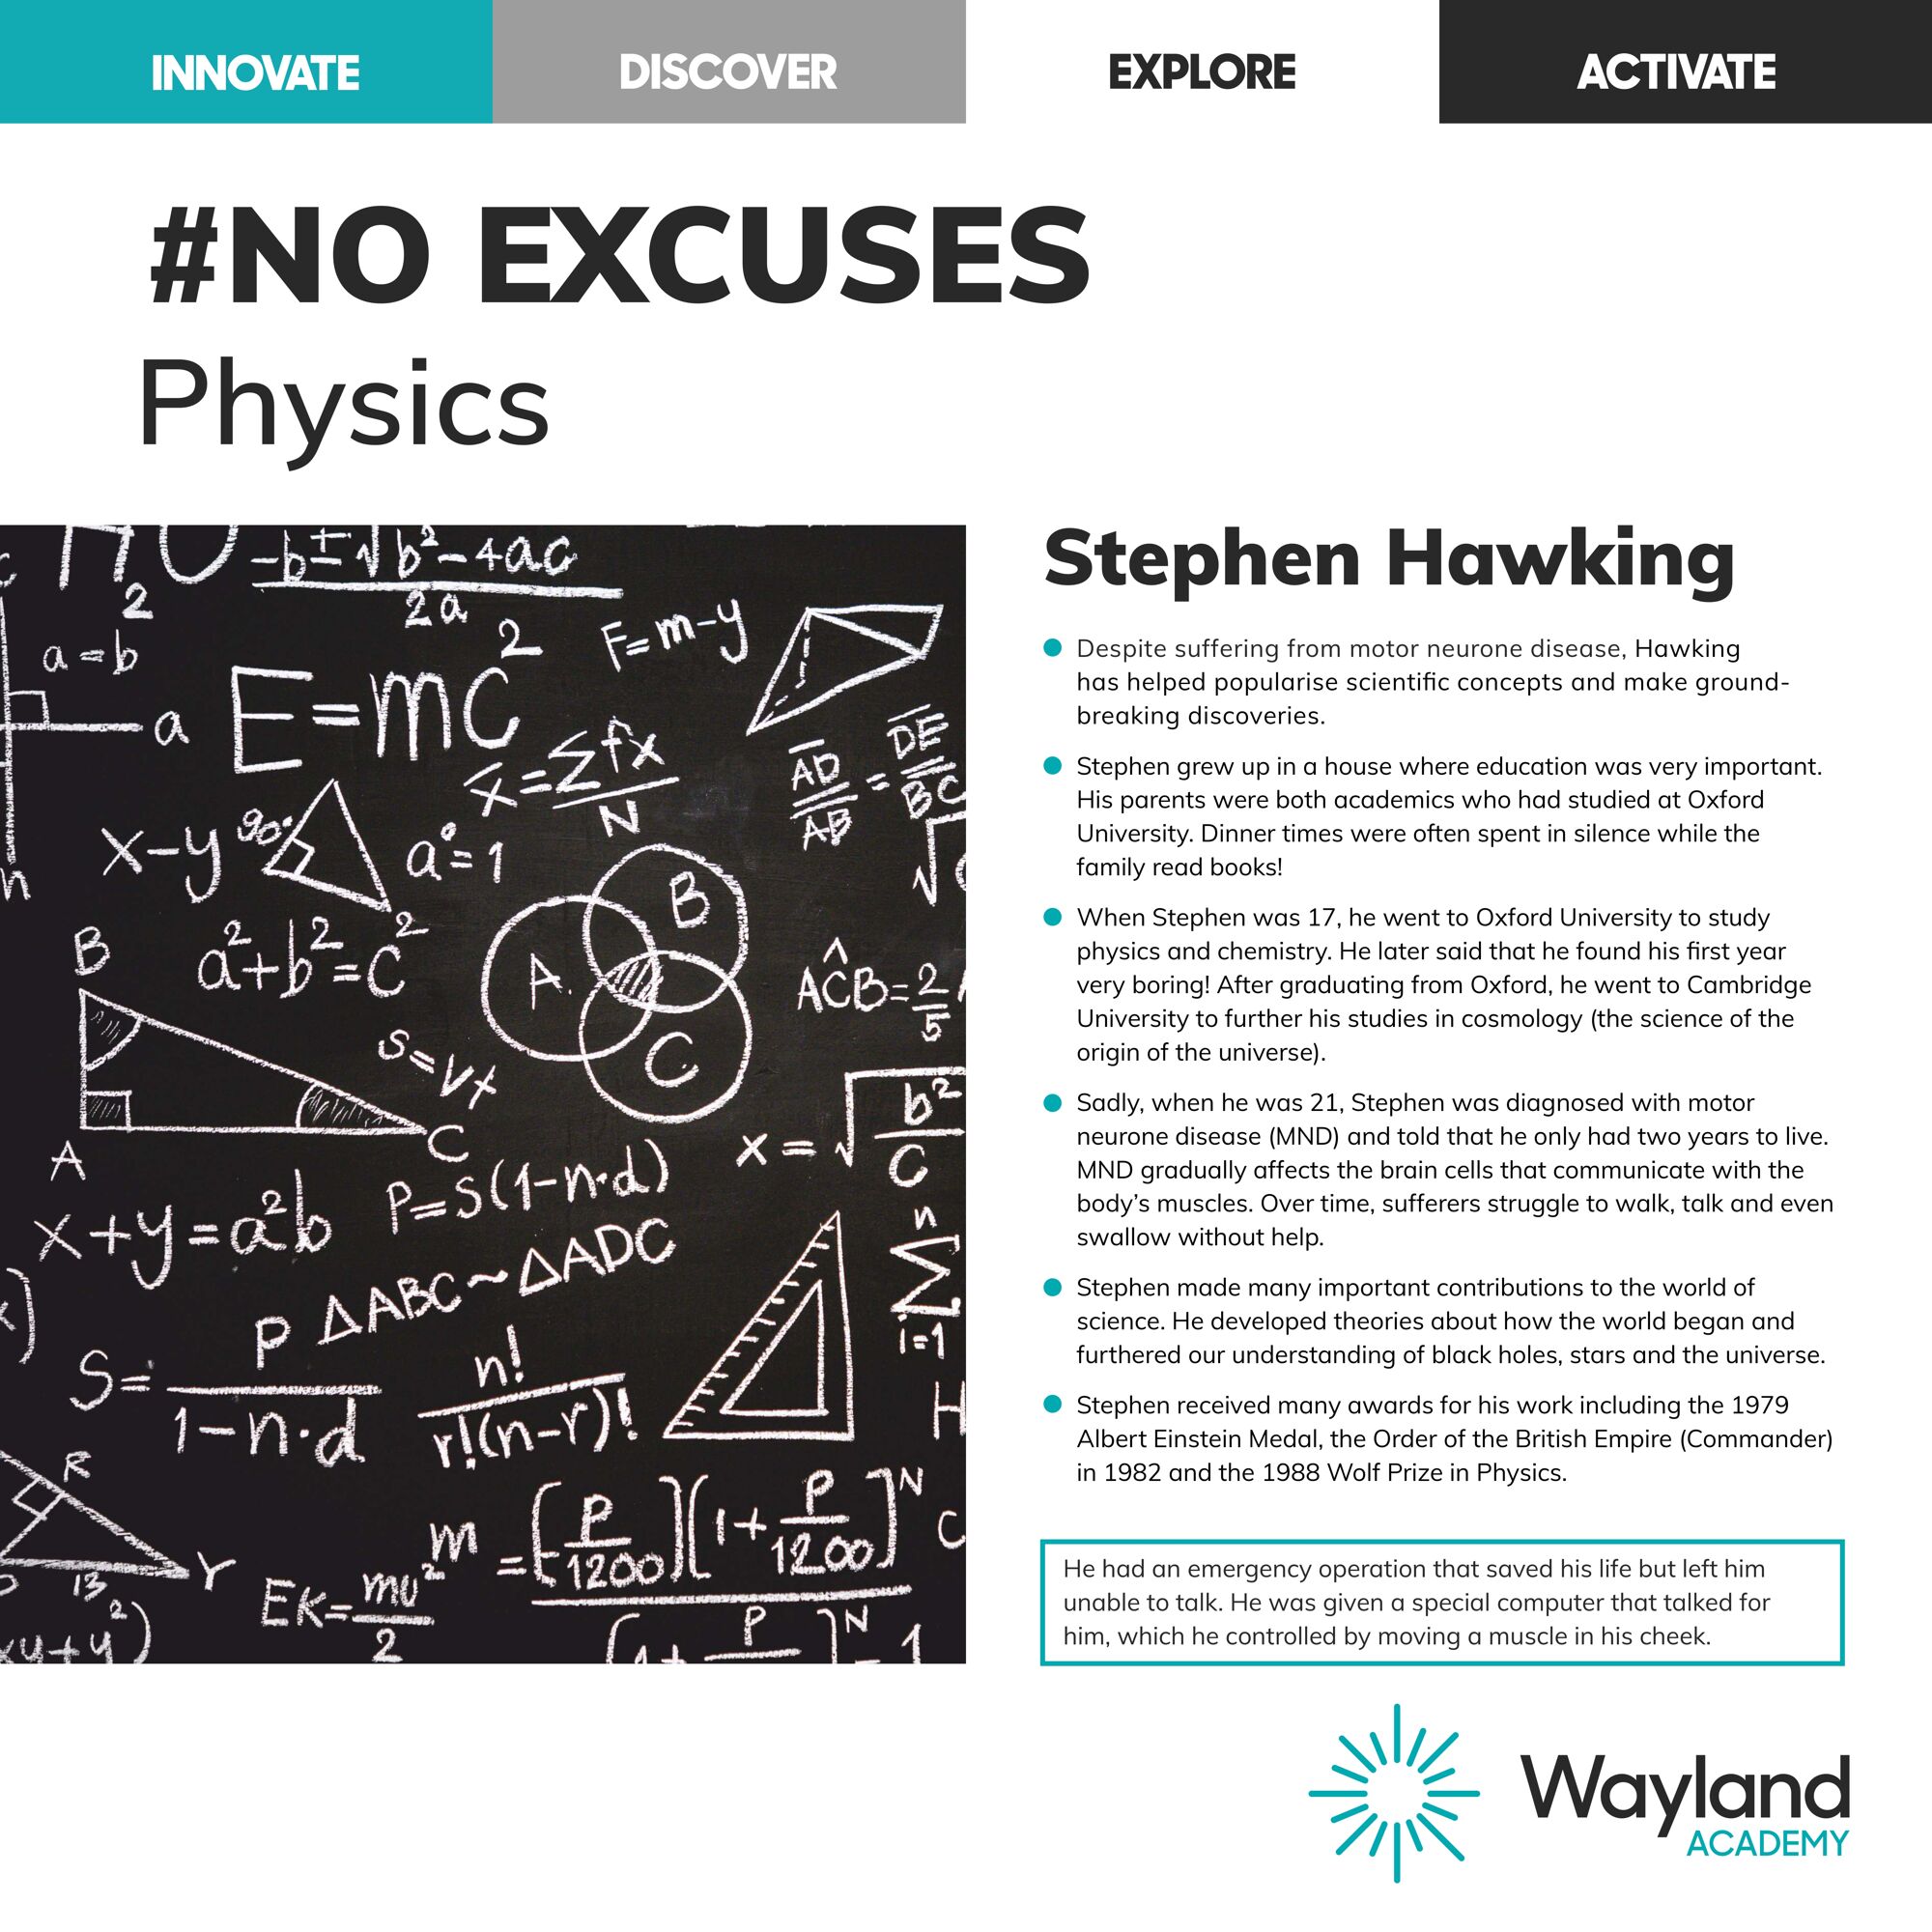 InspirationCurriculumCentre Wayland Academy Poster NoExcusePhysics [53812] page 0001